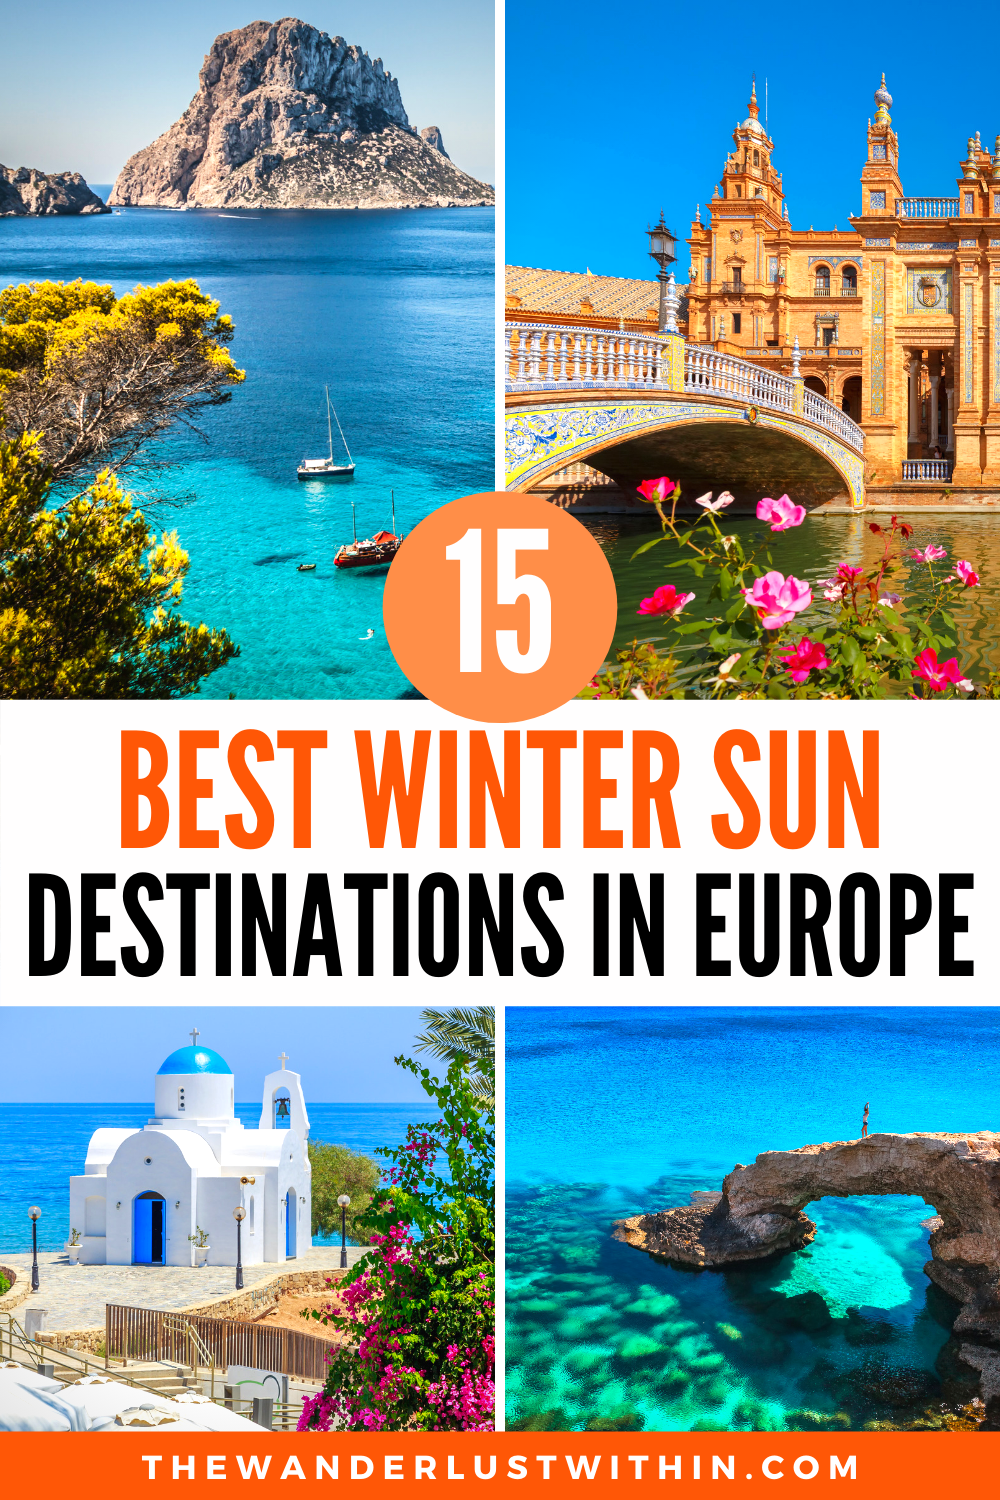 15 Best Winter Sun Destinations in Europe